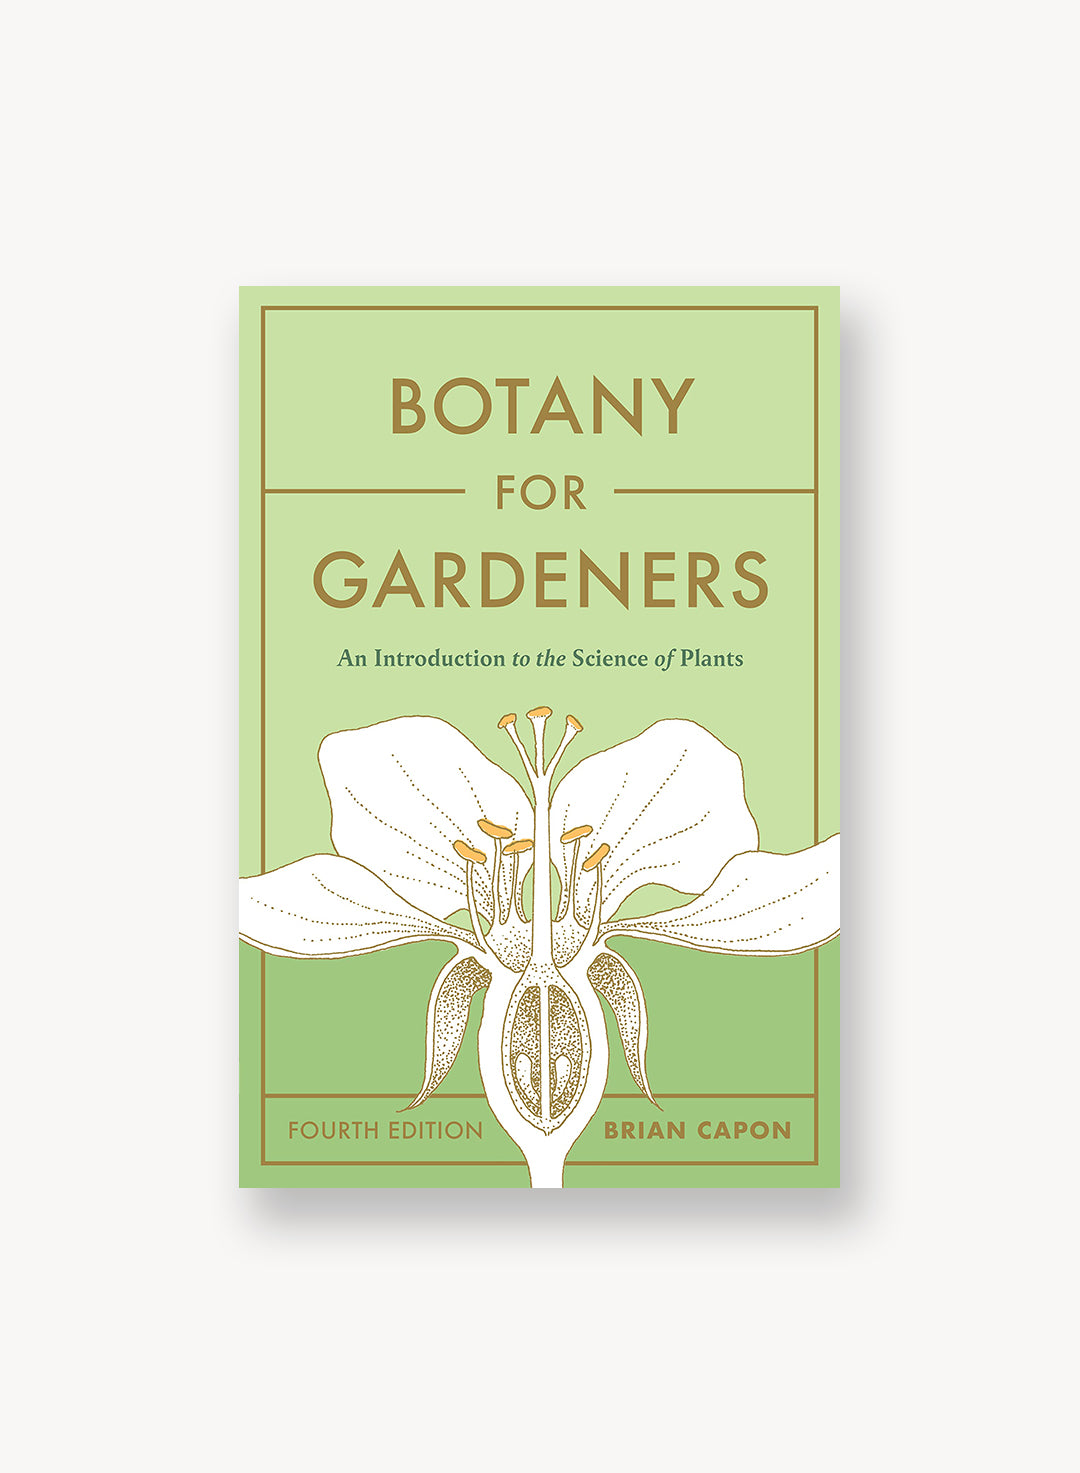 BotanyforGardeners-FourthEdition.jpg